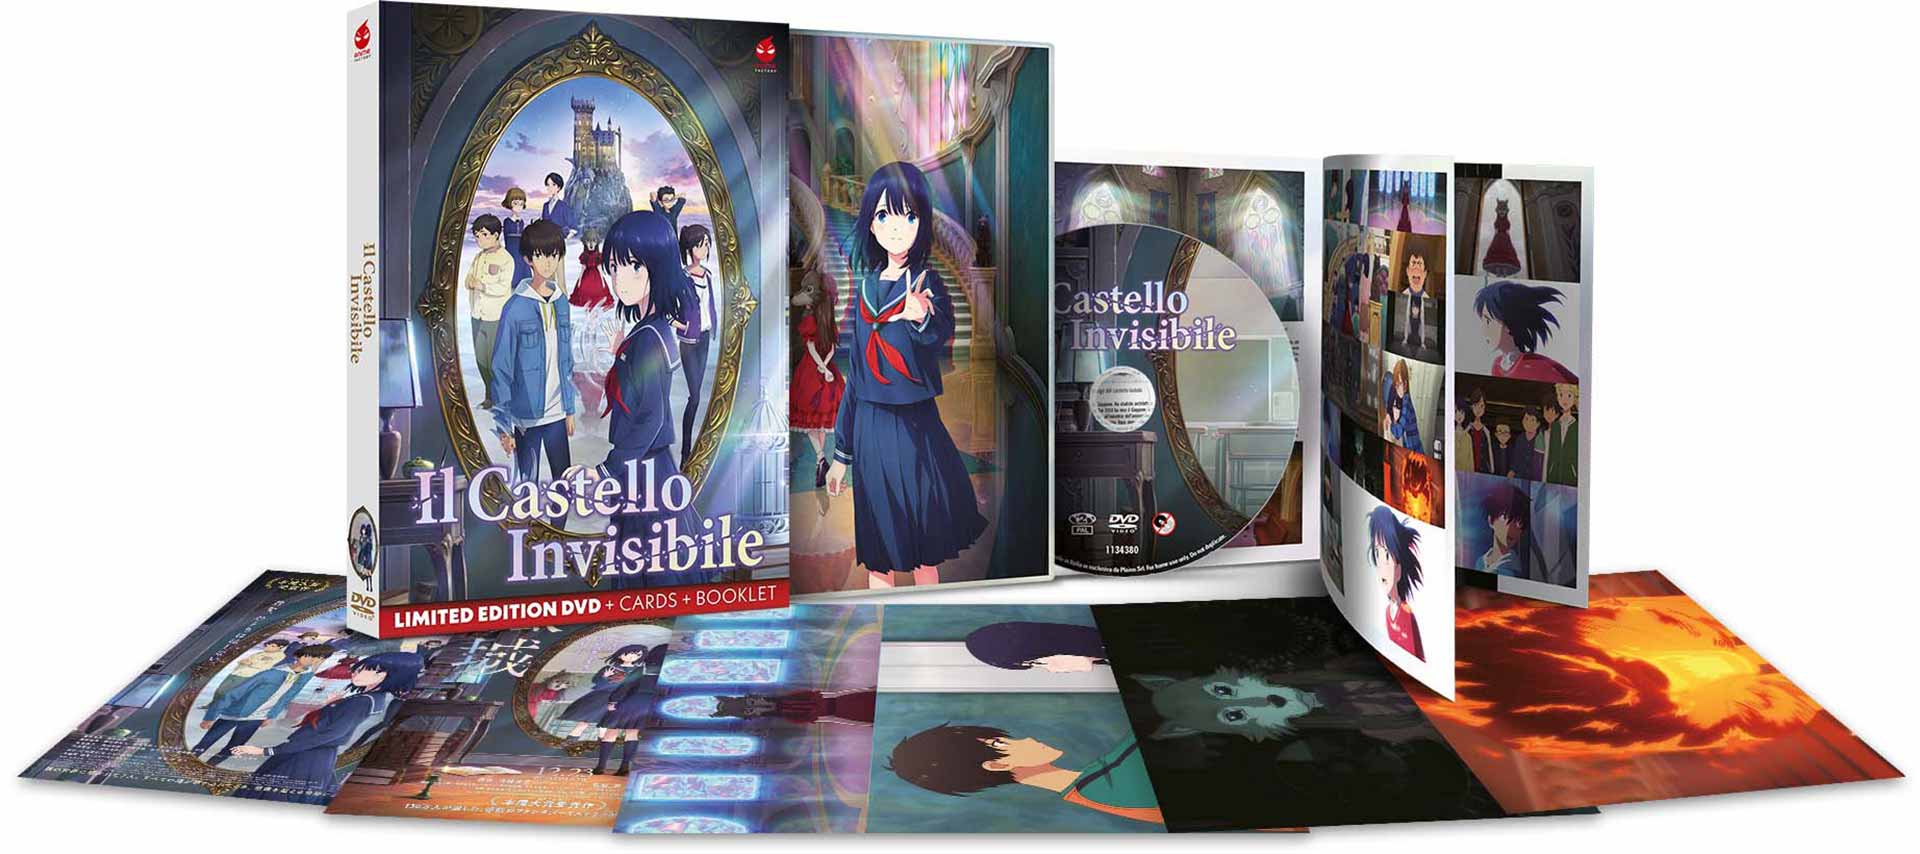 Il Castello Invisibile - Limited Edition DVD + Cards + Booklet (DVD)